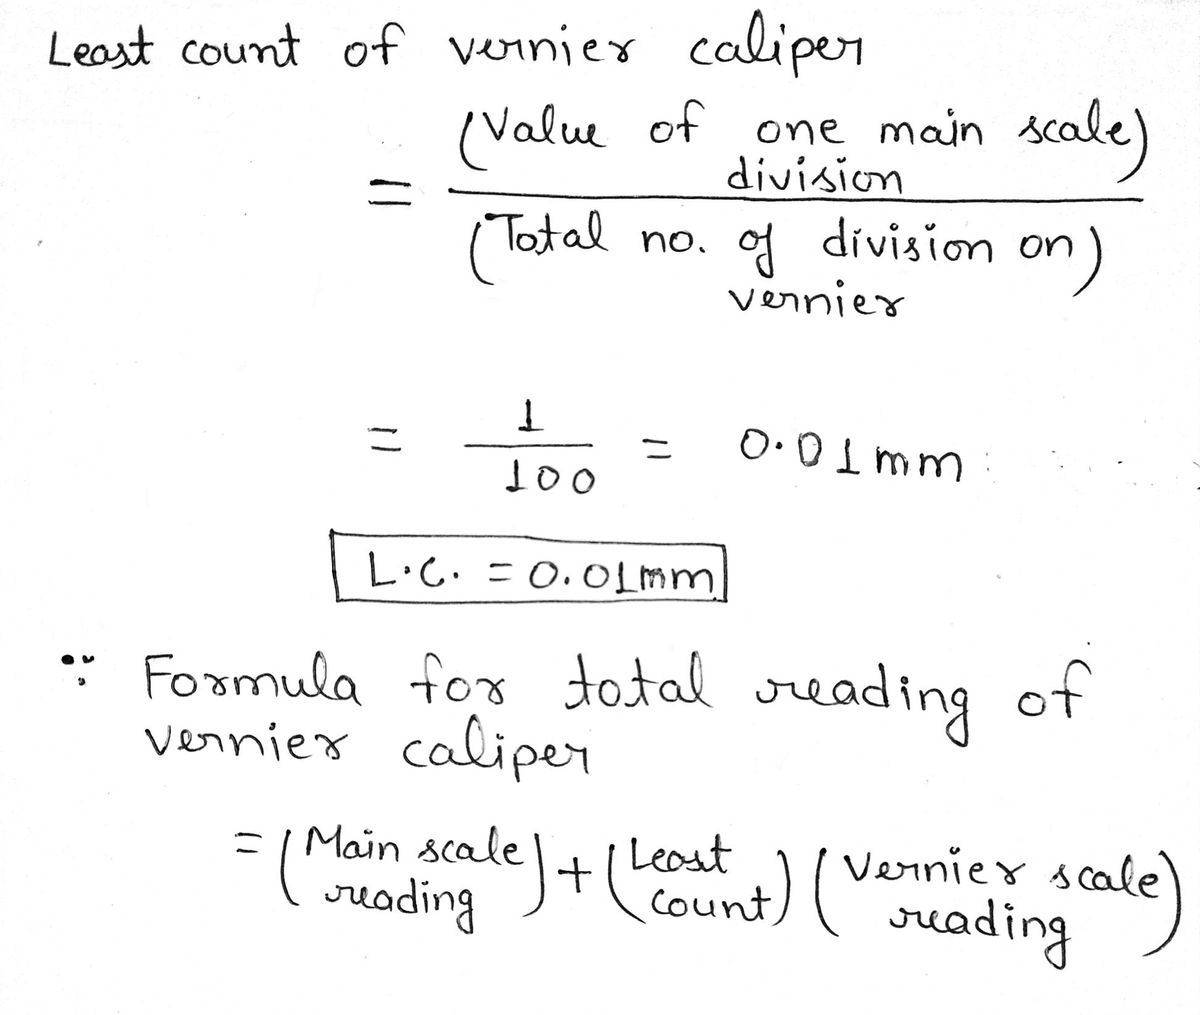 vernier caliper least count formula